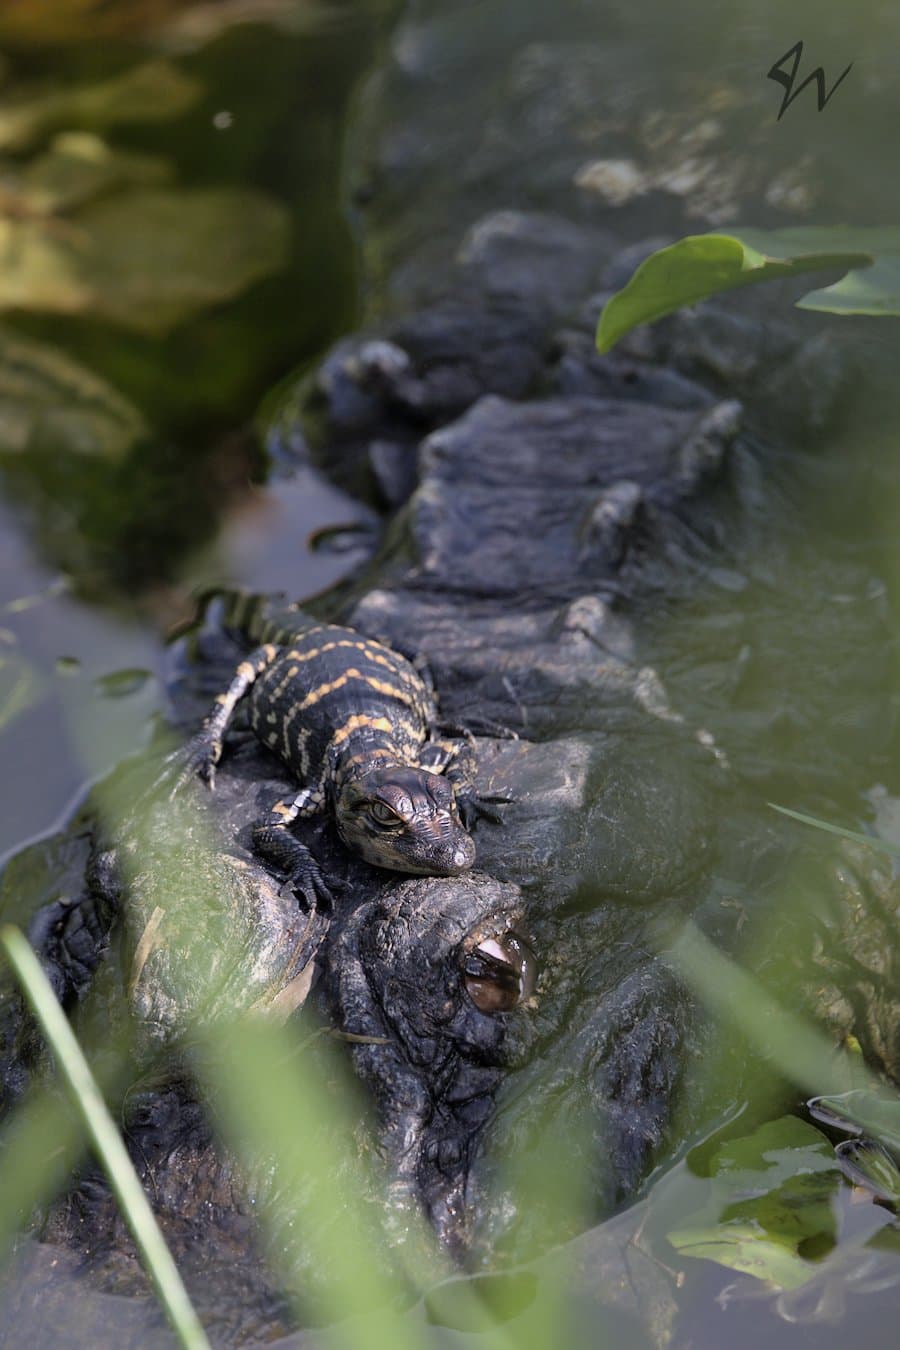 Gator newborn basking in sun upon its mothers head.